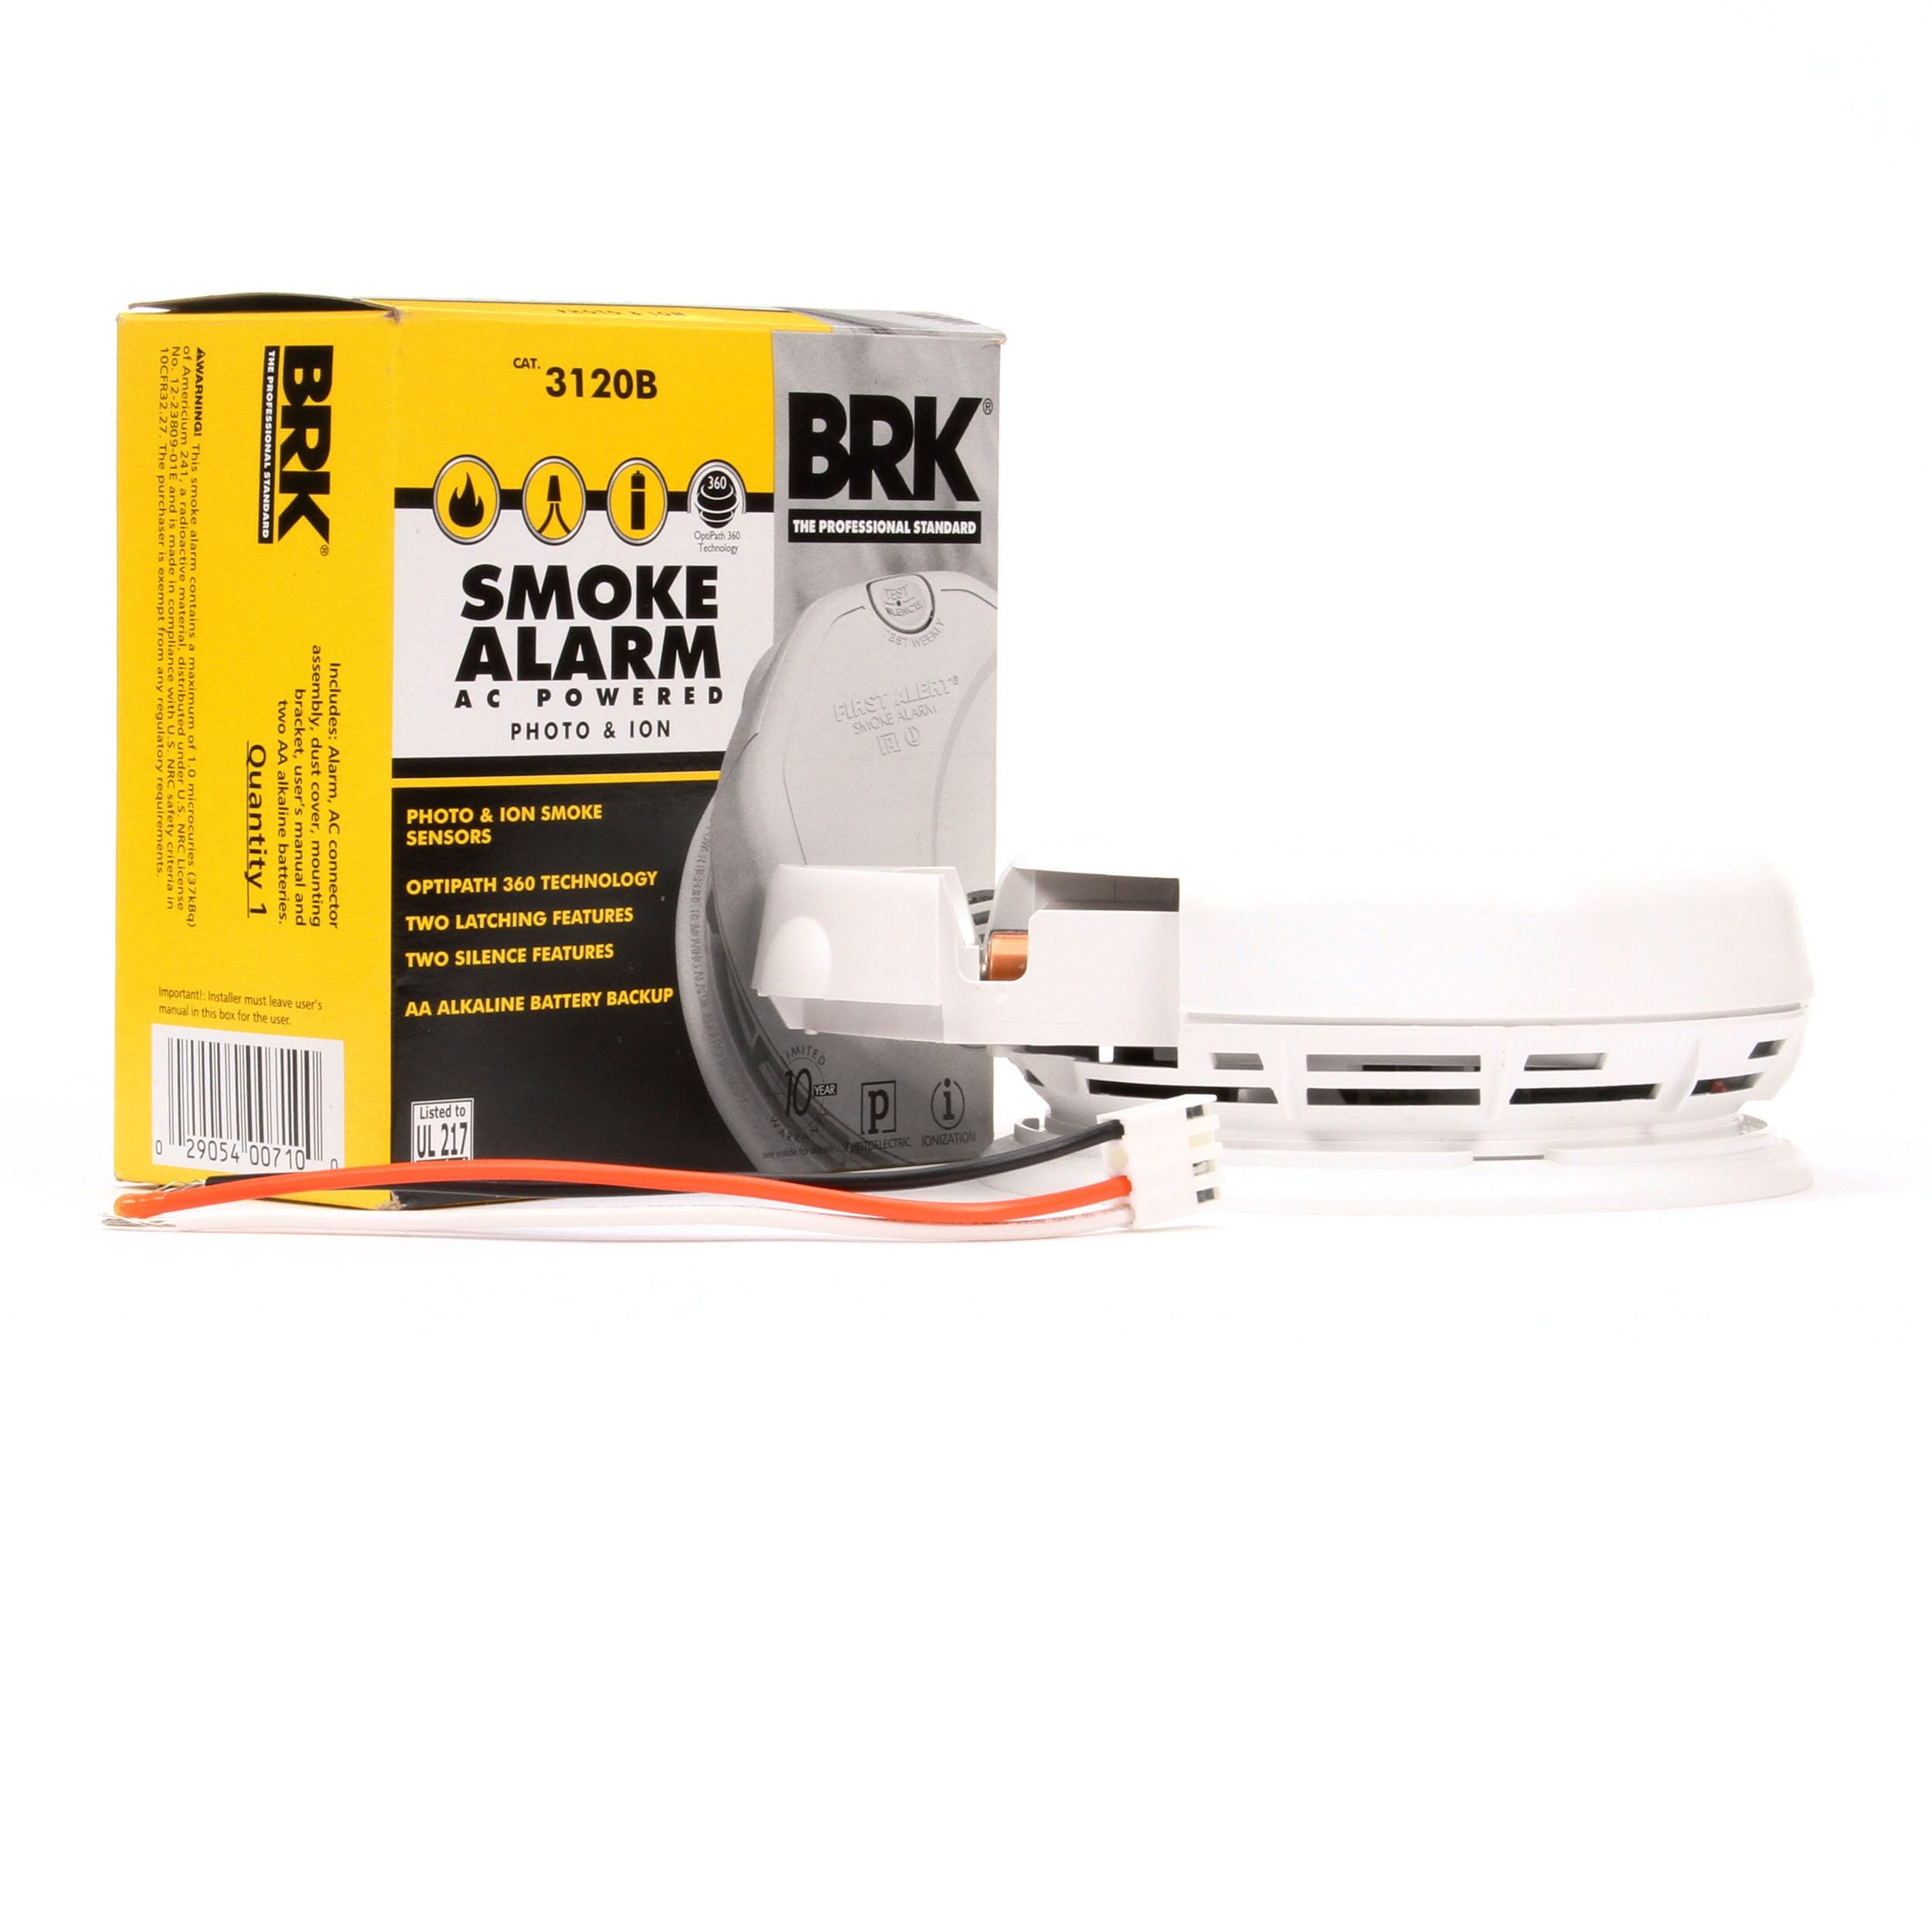 = BRK Smoke Alarm AC Powered Photo & Ion Smoke Sensors CAT3120B NEW 